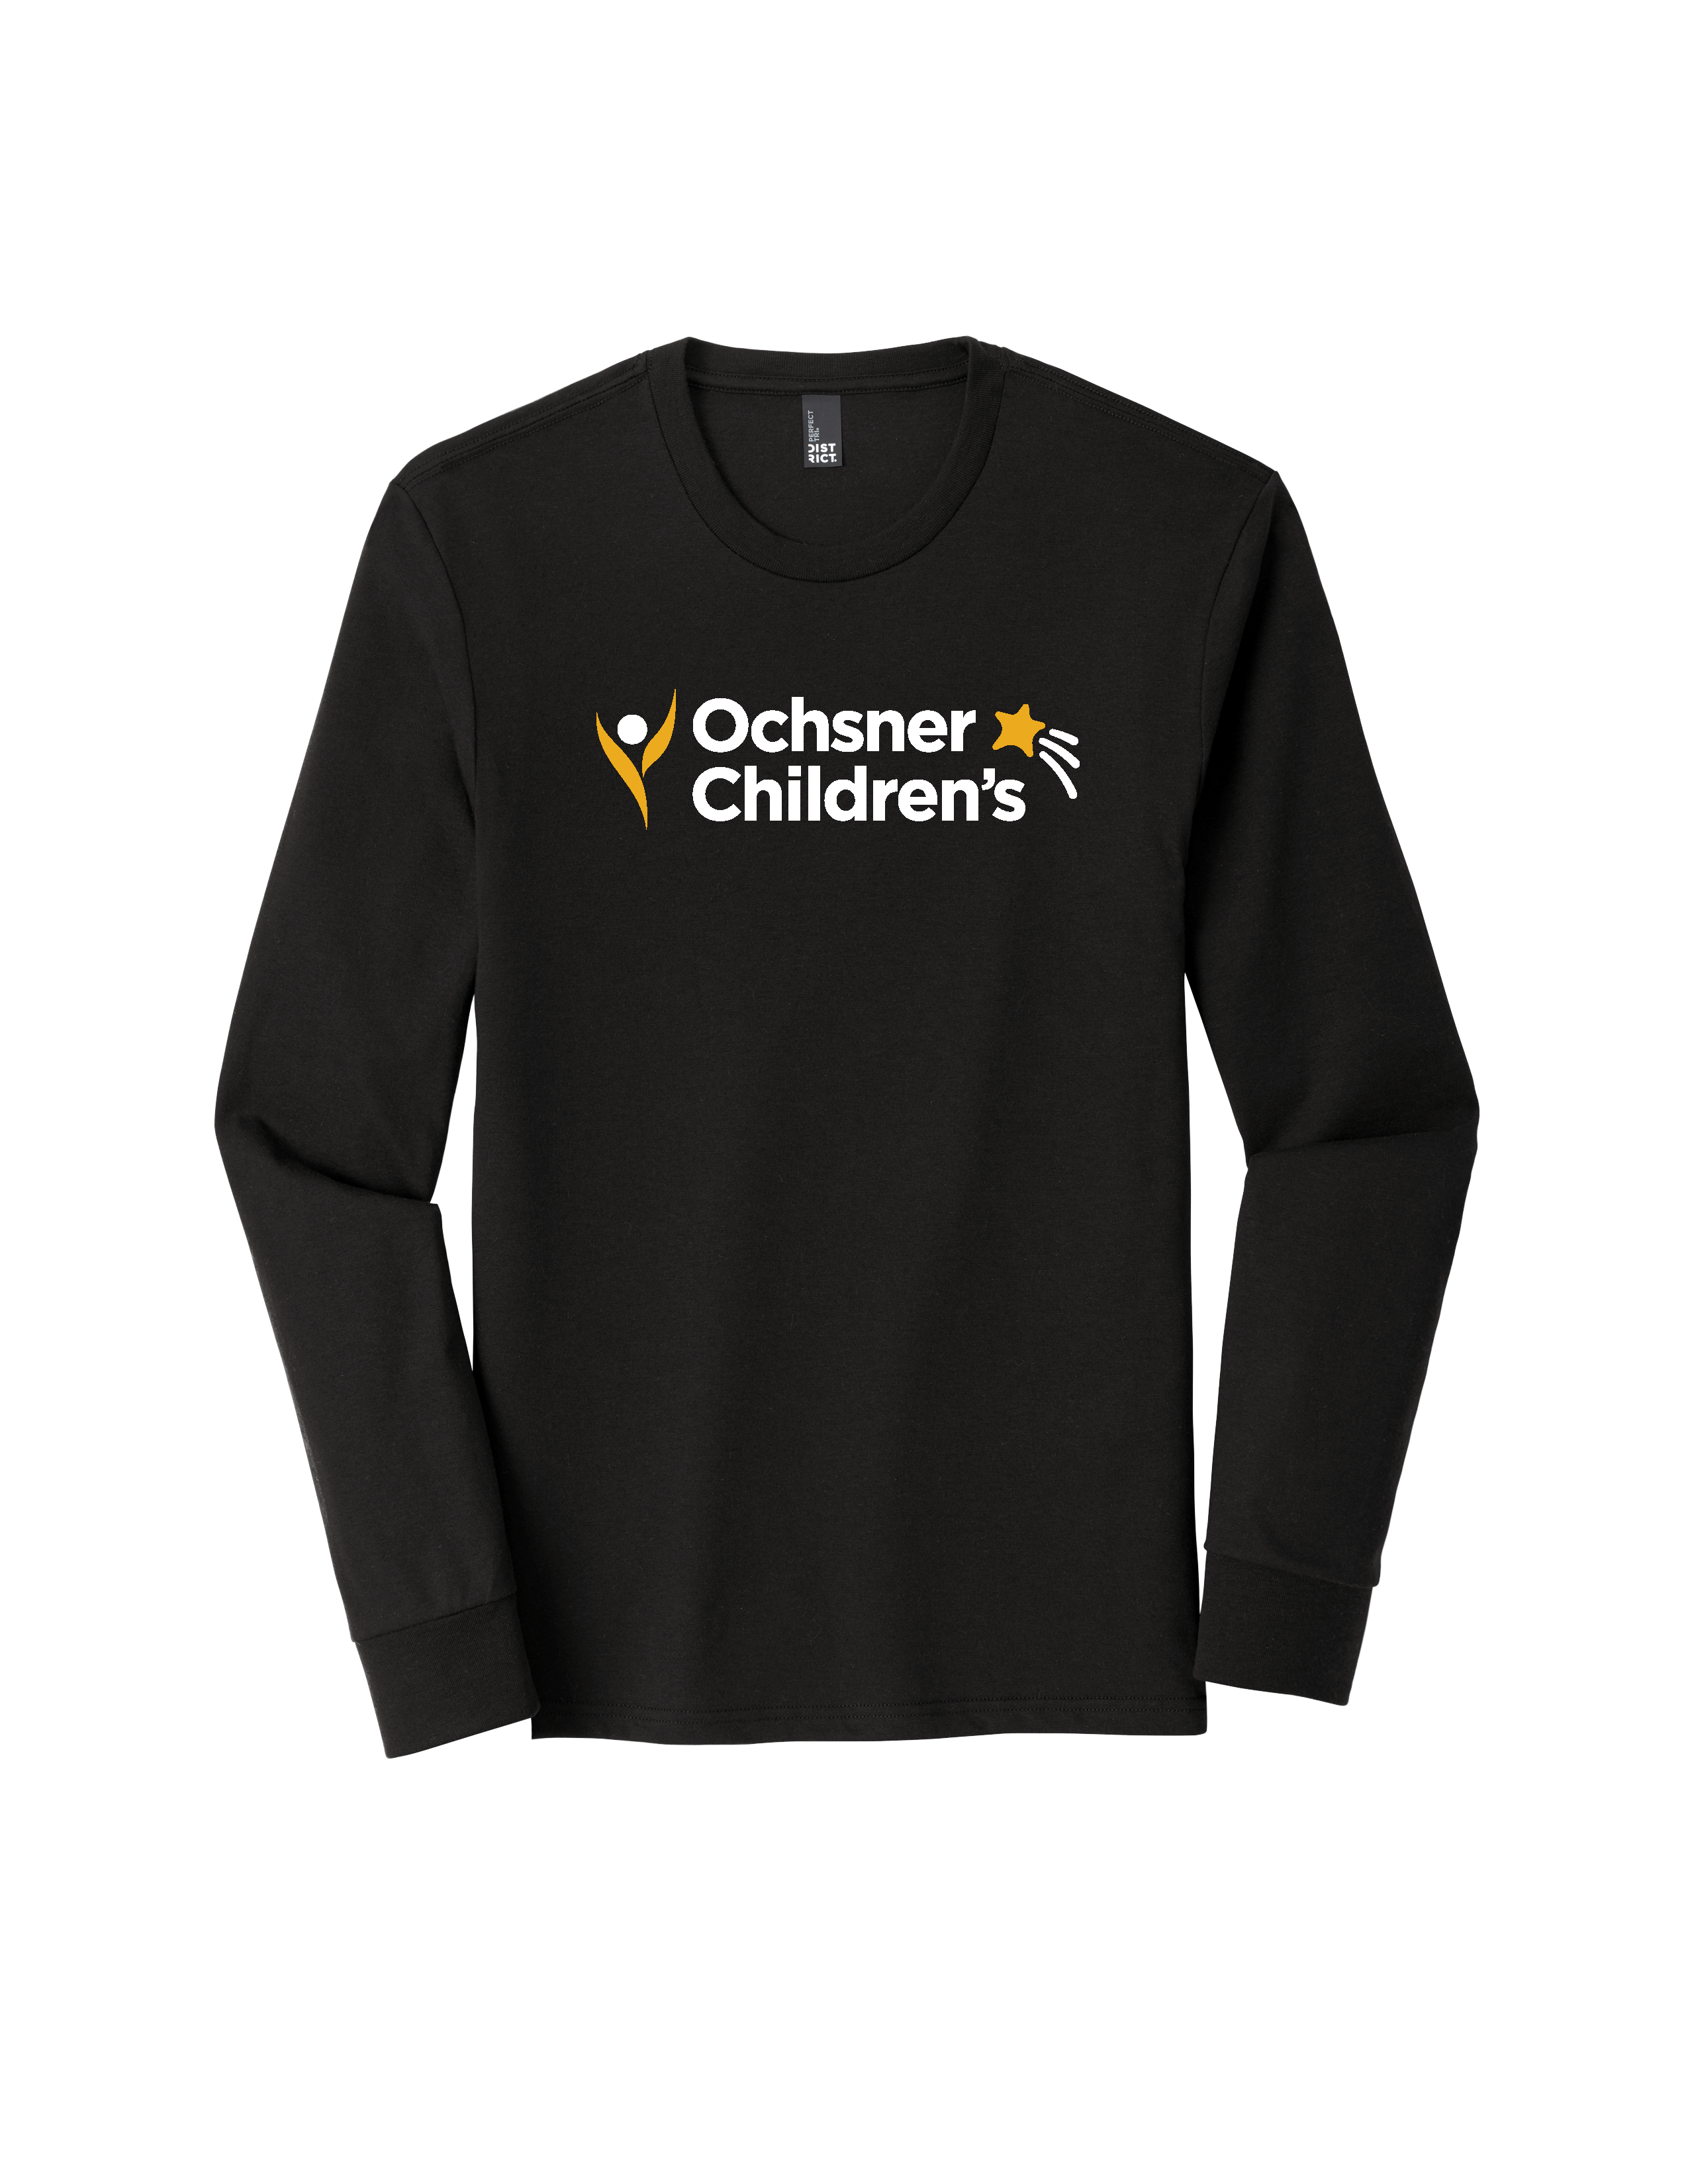 Ochsner Children's Long Sleeve Unisex T-Shirt, , large image number 2